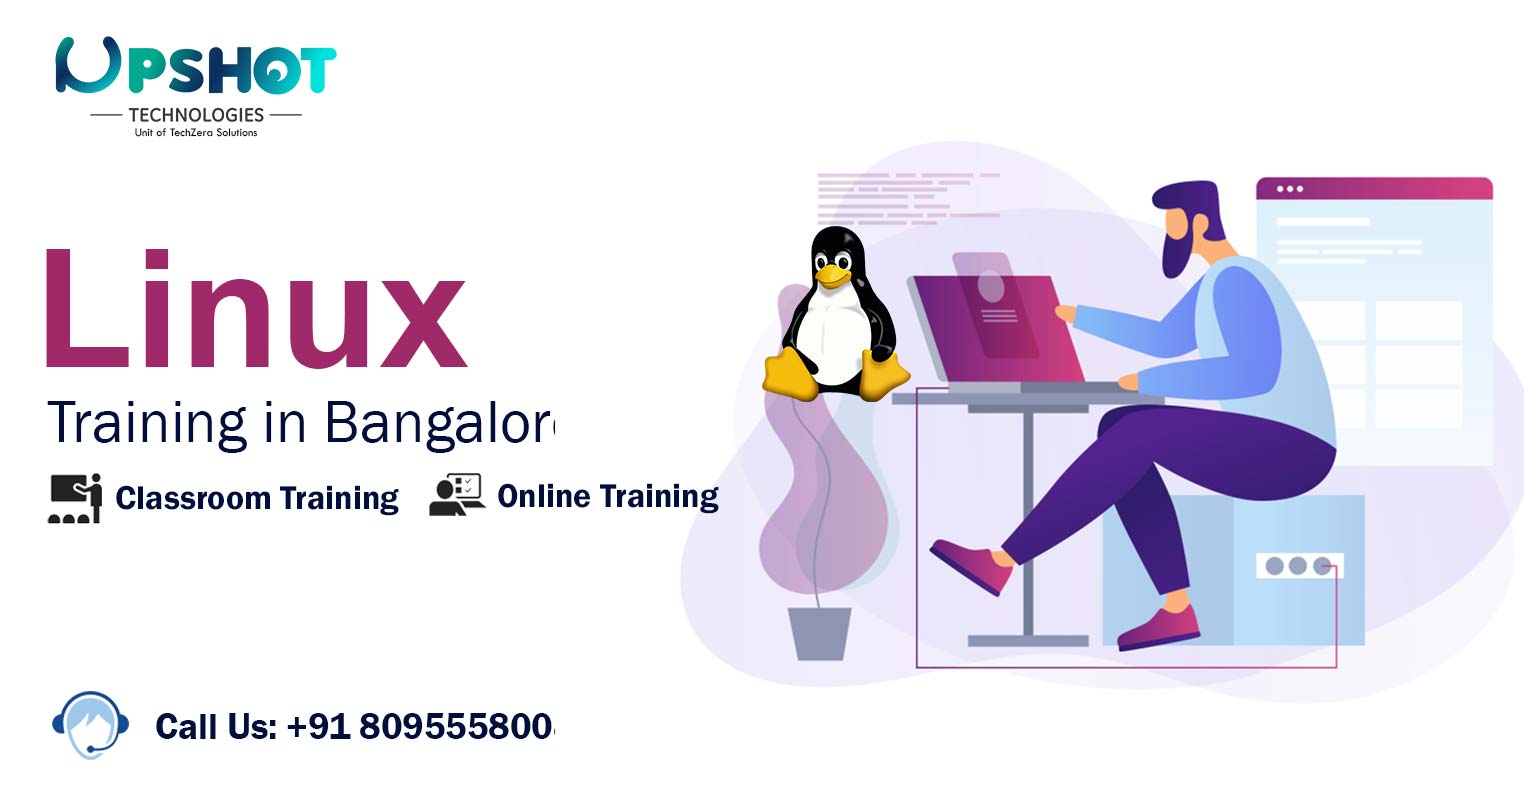 Linux Training in bangalore